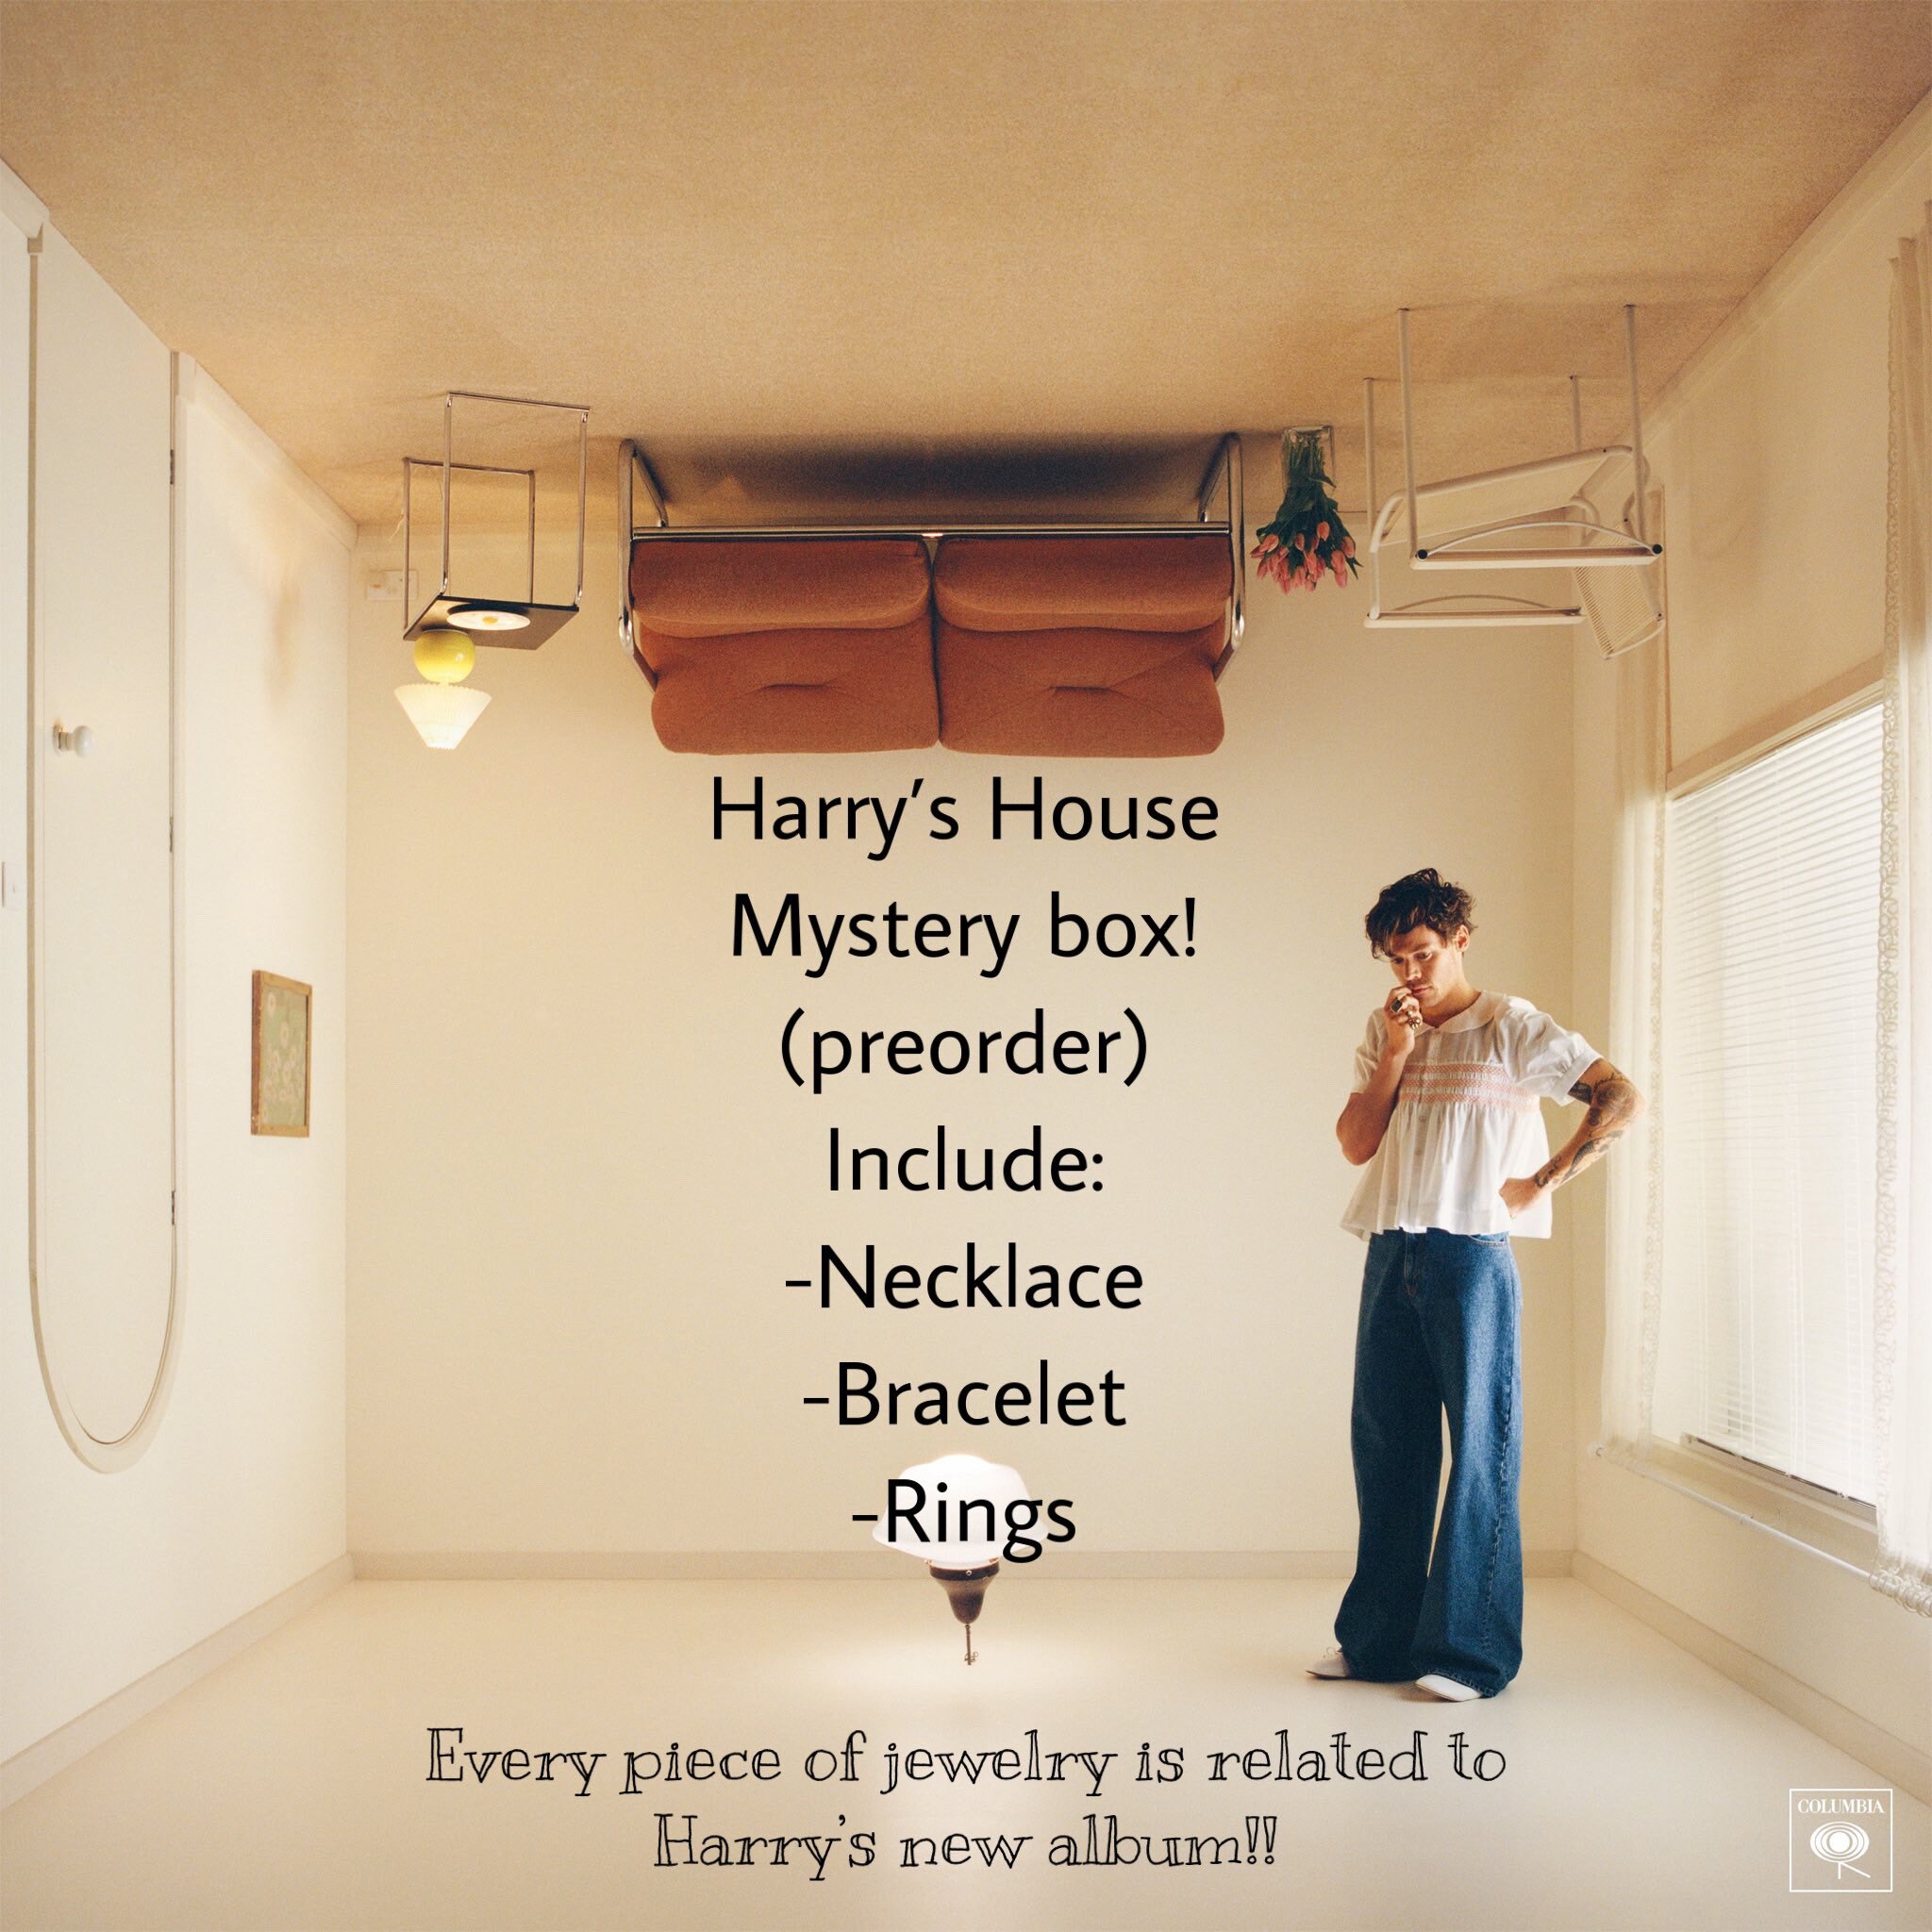 Harry styles mystery box -  México